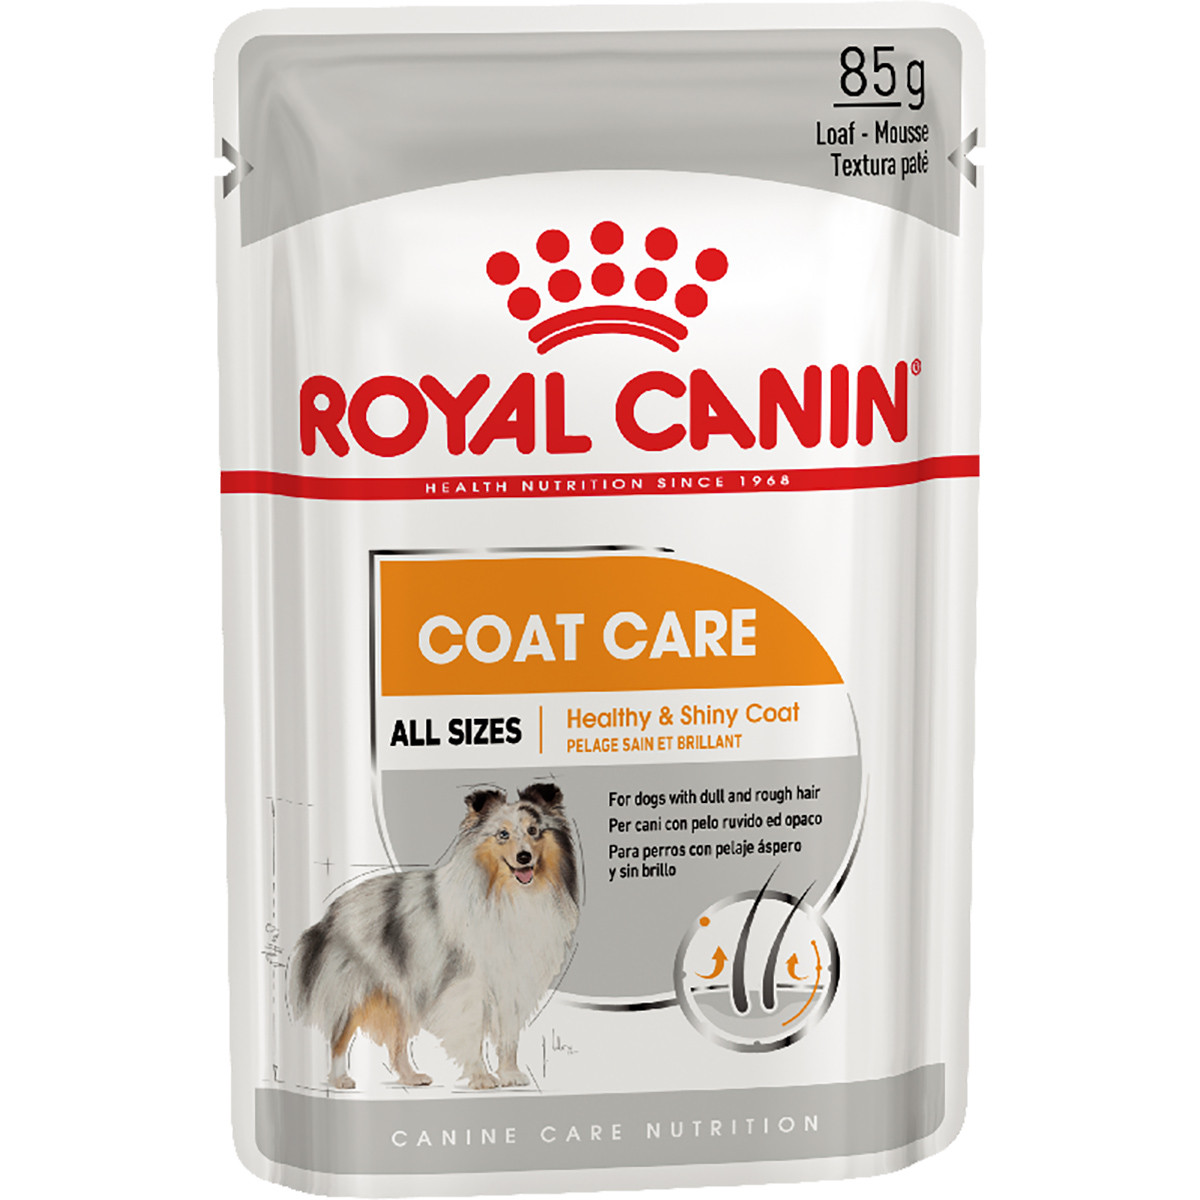 Royal Canin Coat Beauty Loaf вологий корм для собак з тьмяною та сухою шерстю, паштет, 85ГРх12ШТ, фото 1